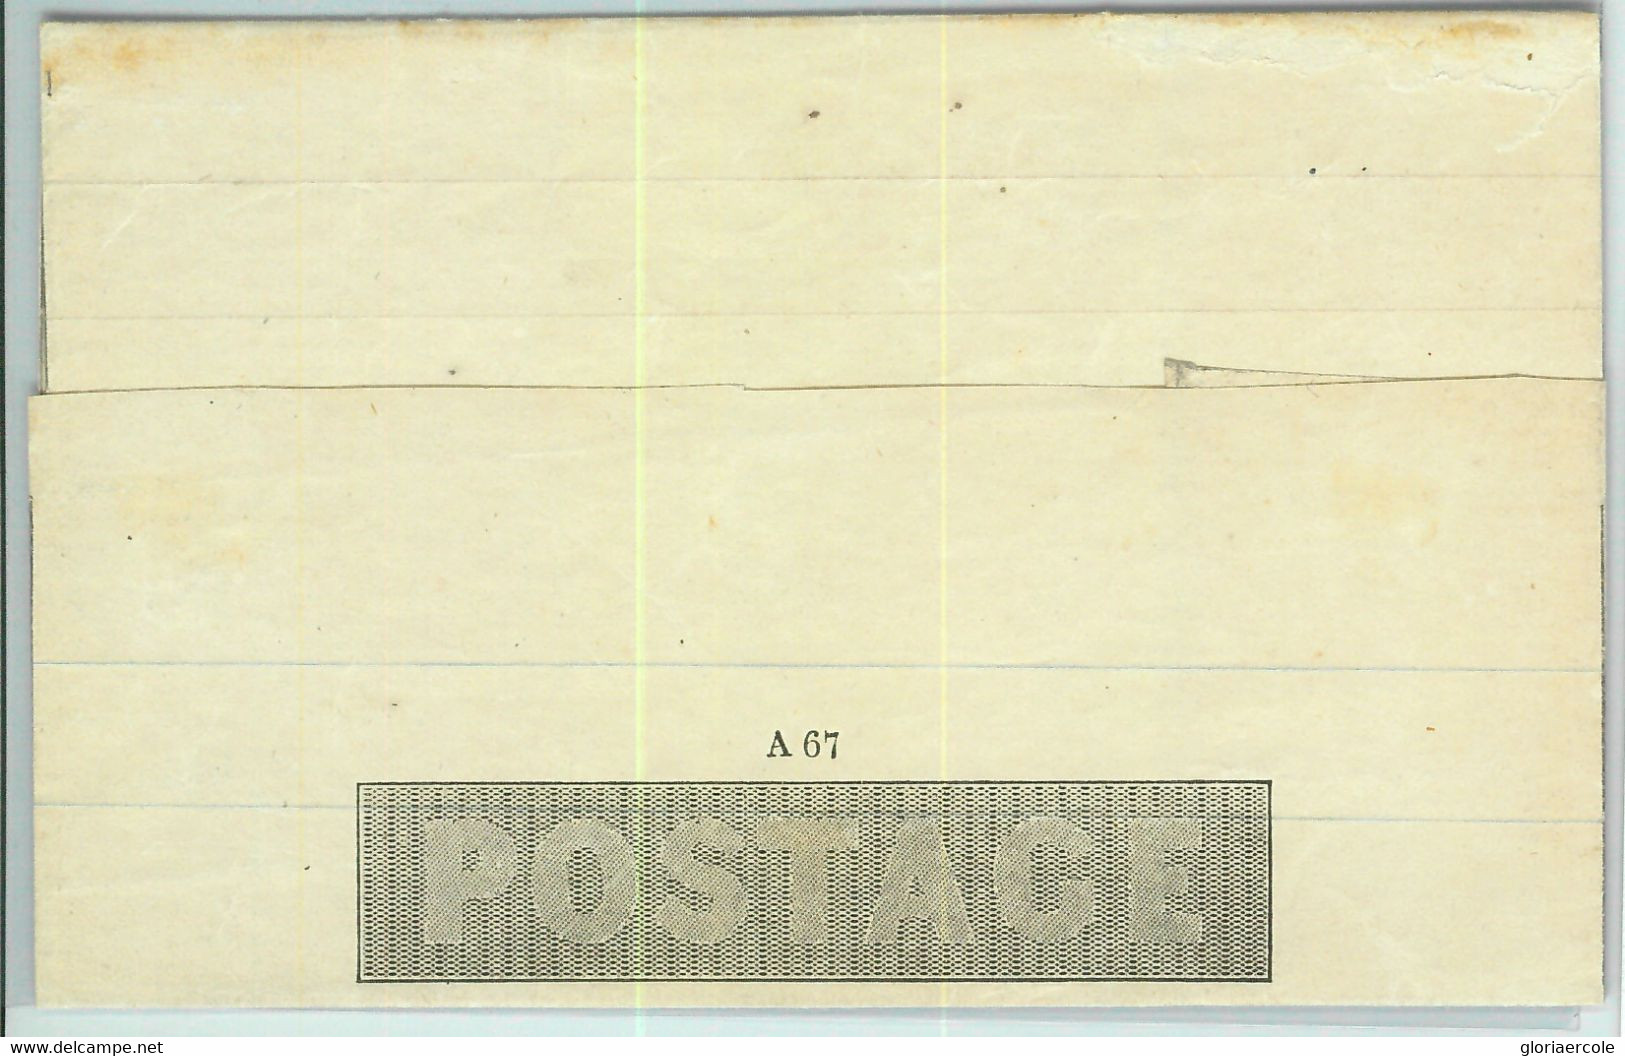 BK0674 - GB Great Brittain - POSTAL HISTORY - MULREADY Letter  # A67 - LIONS - 1840 Mulready Omslagen En Postblad